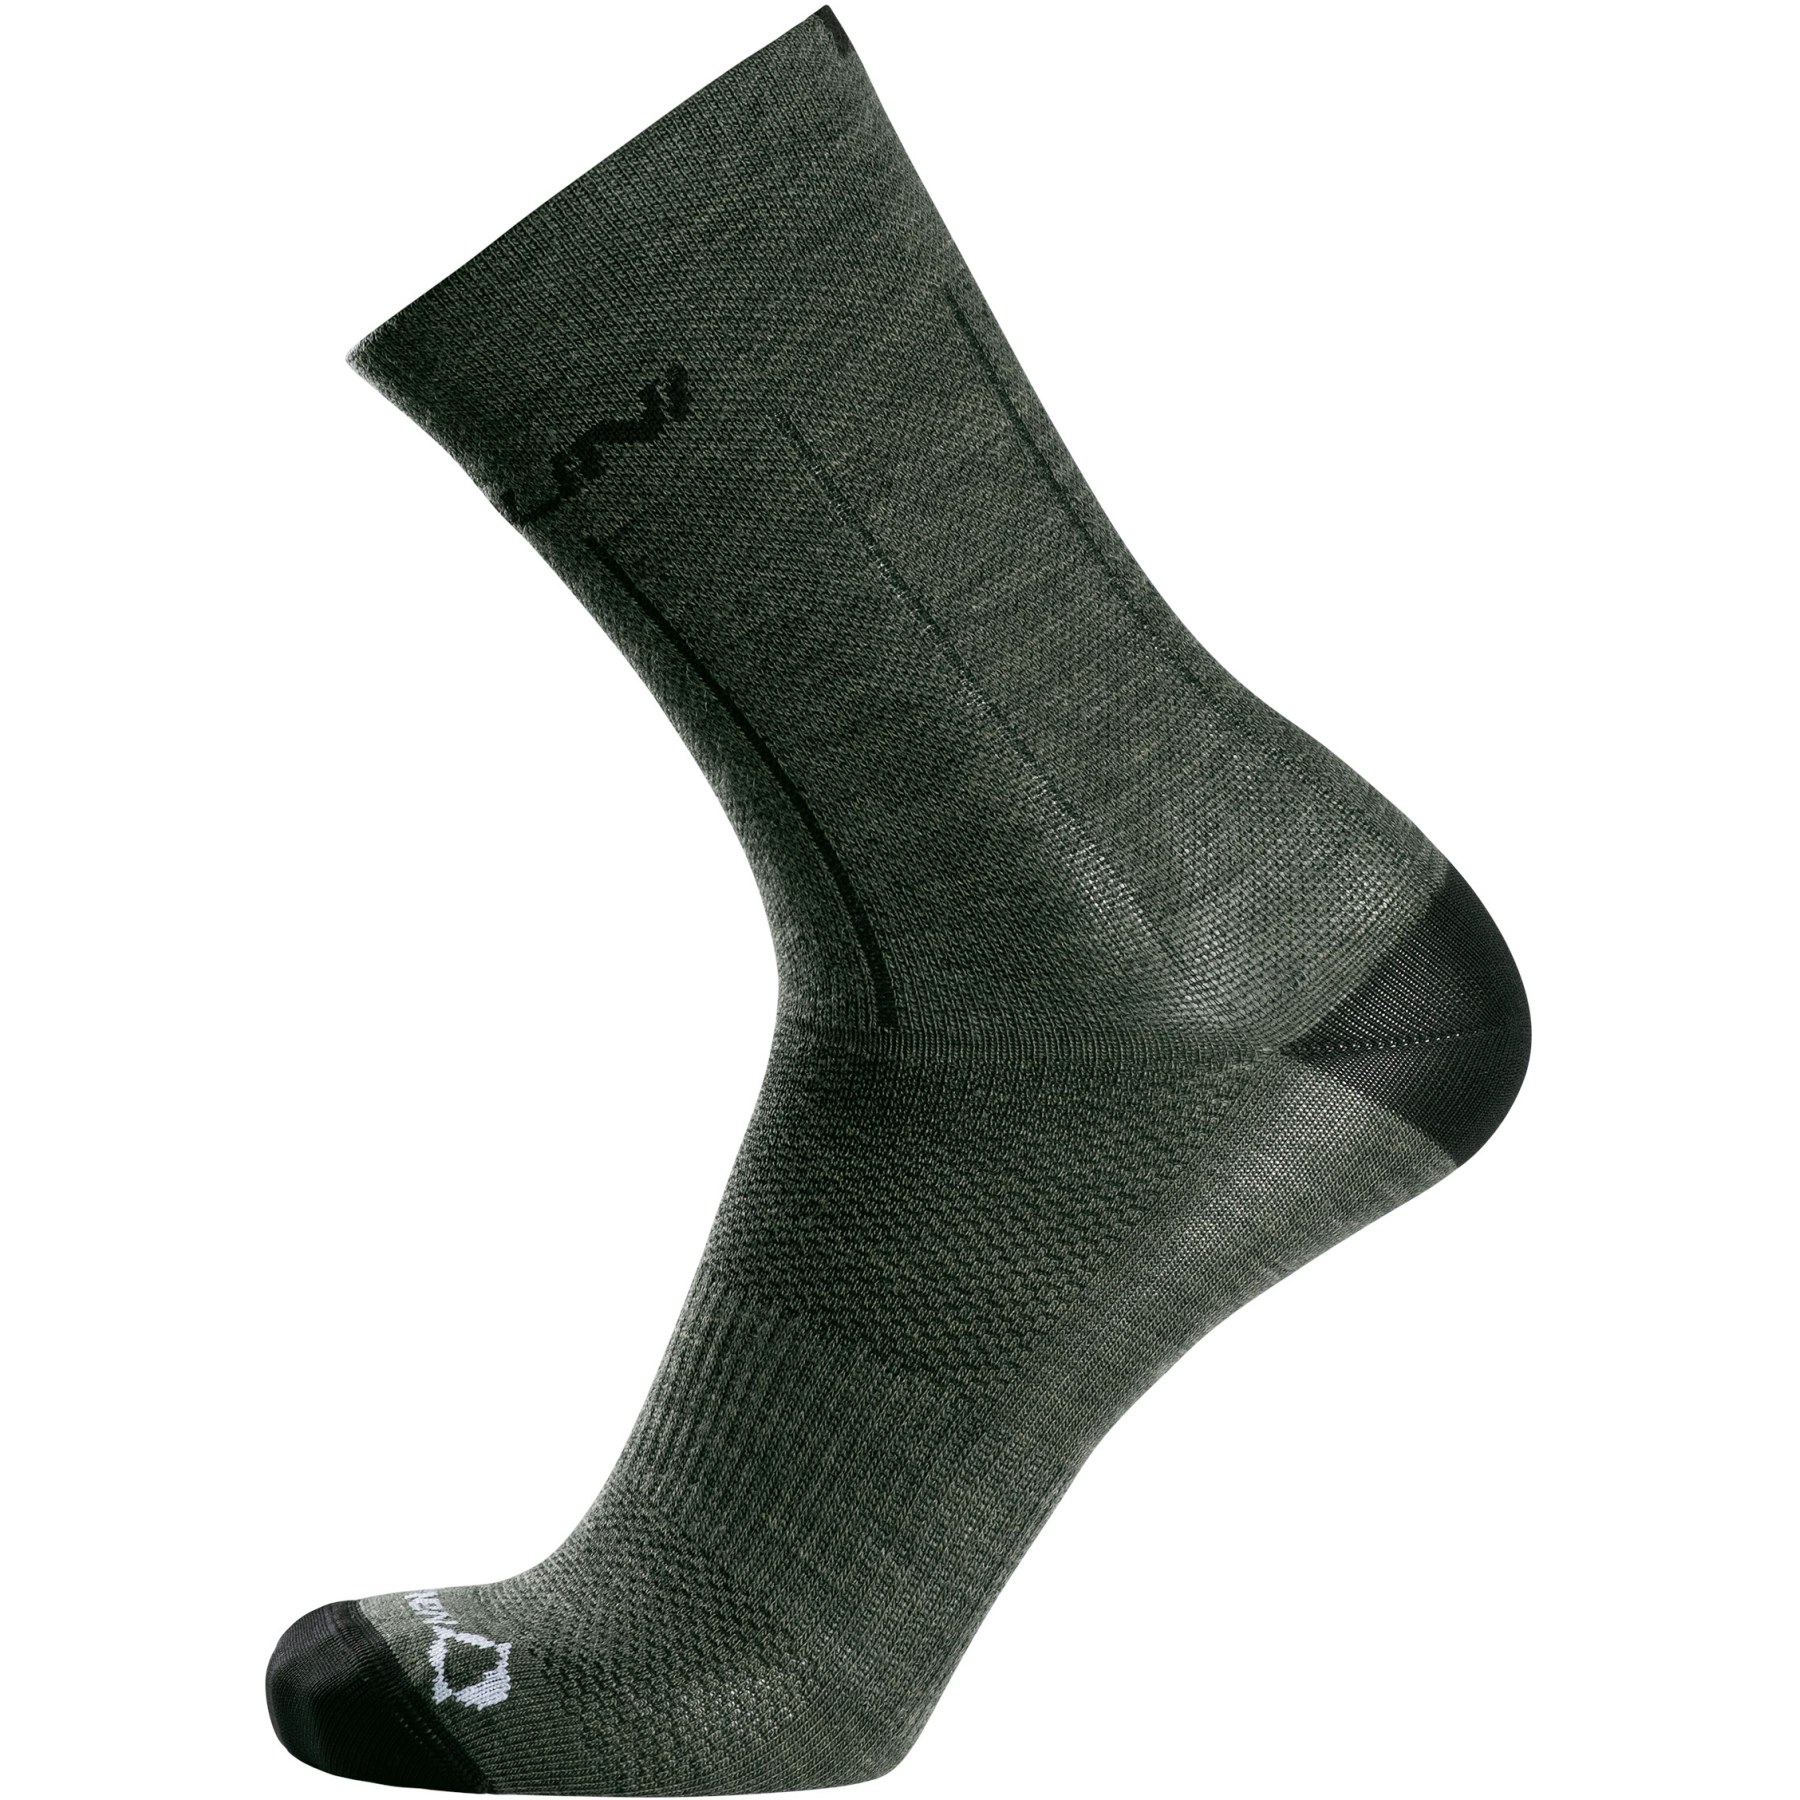 Productfoto van Nalini New Wool Socks - olive green 4250